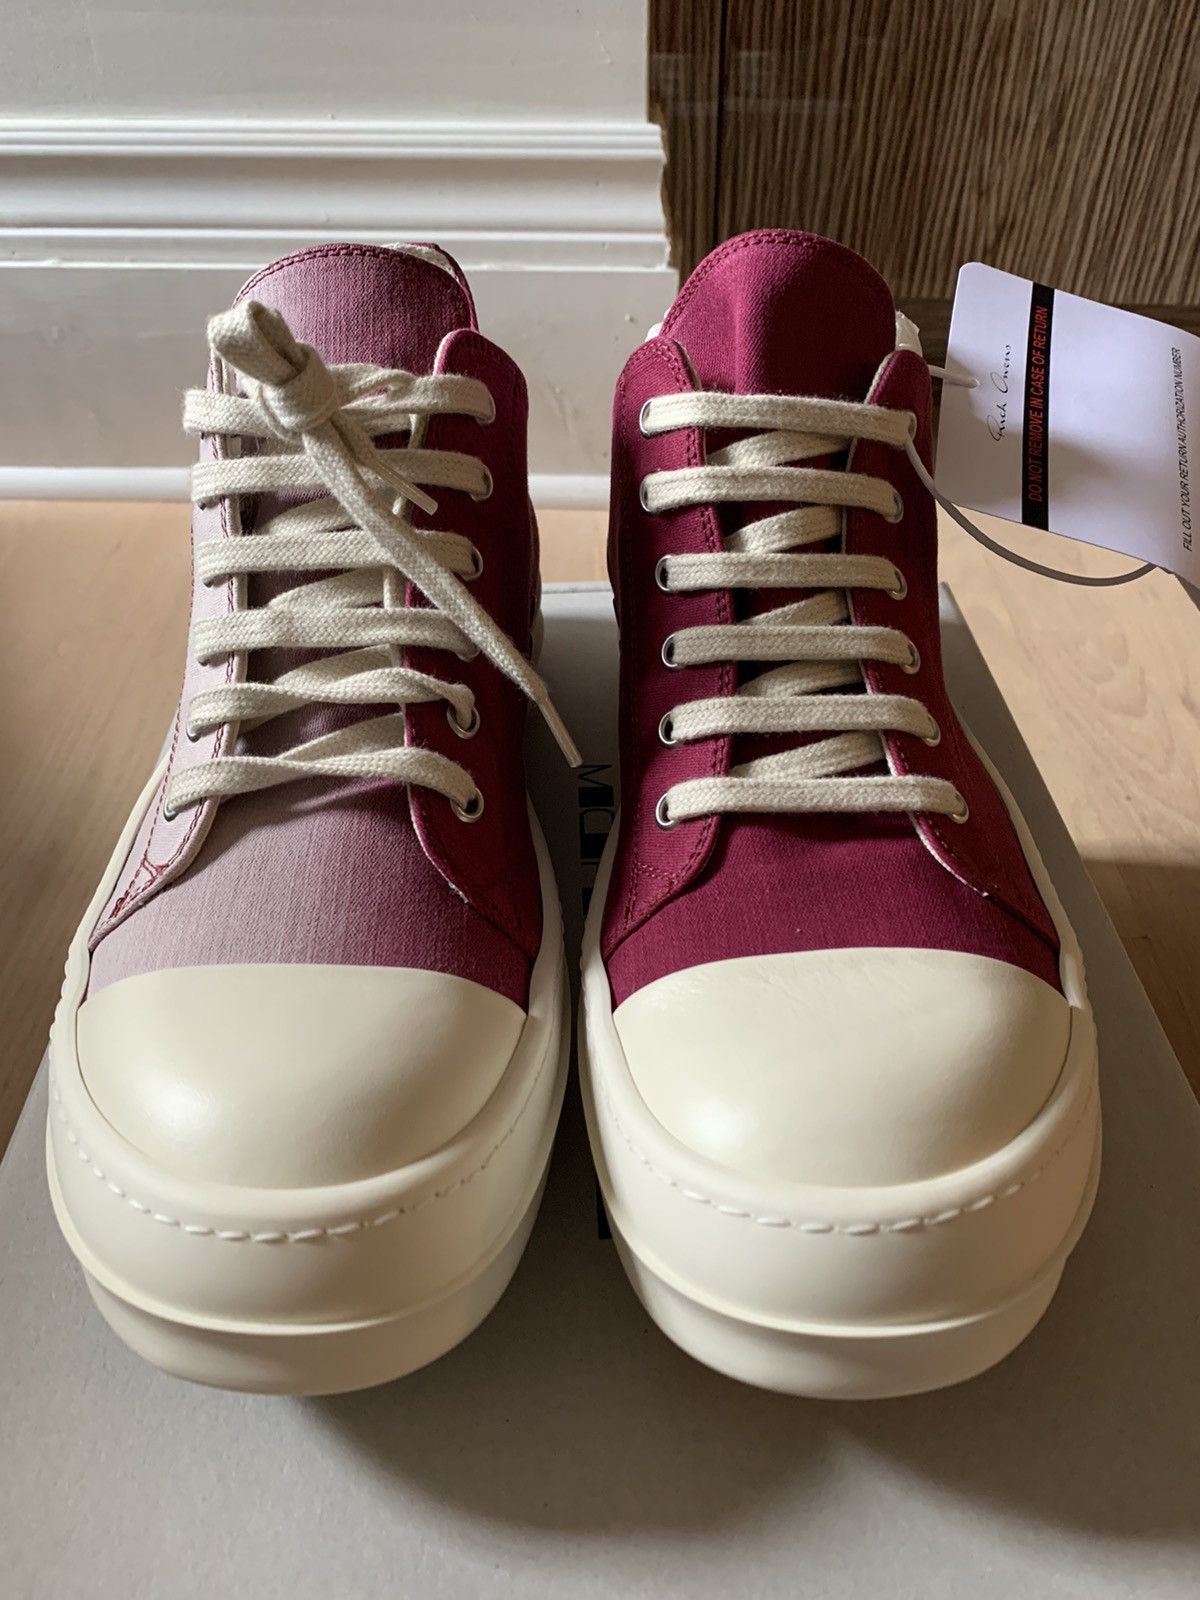 Rick Owens Rick owens Drkshdw low ramones sneaker degrade gradient pink Size US 8 / EU 41 - 2 Preview